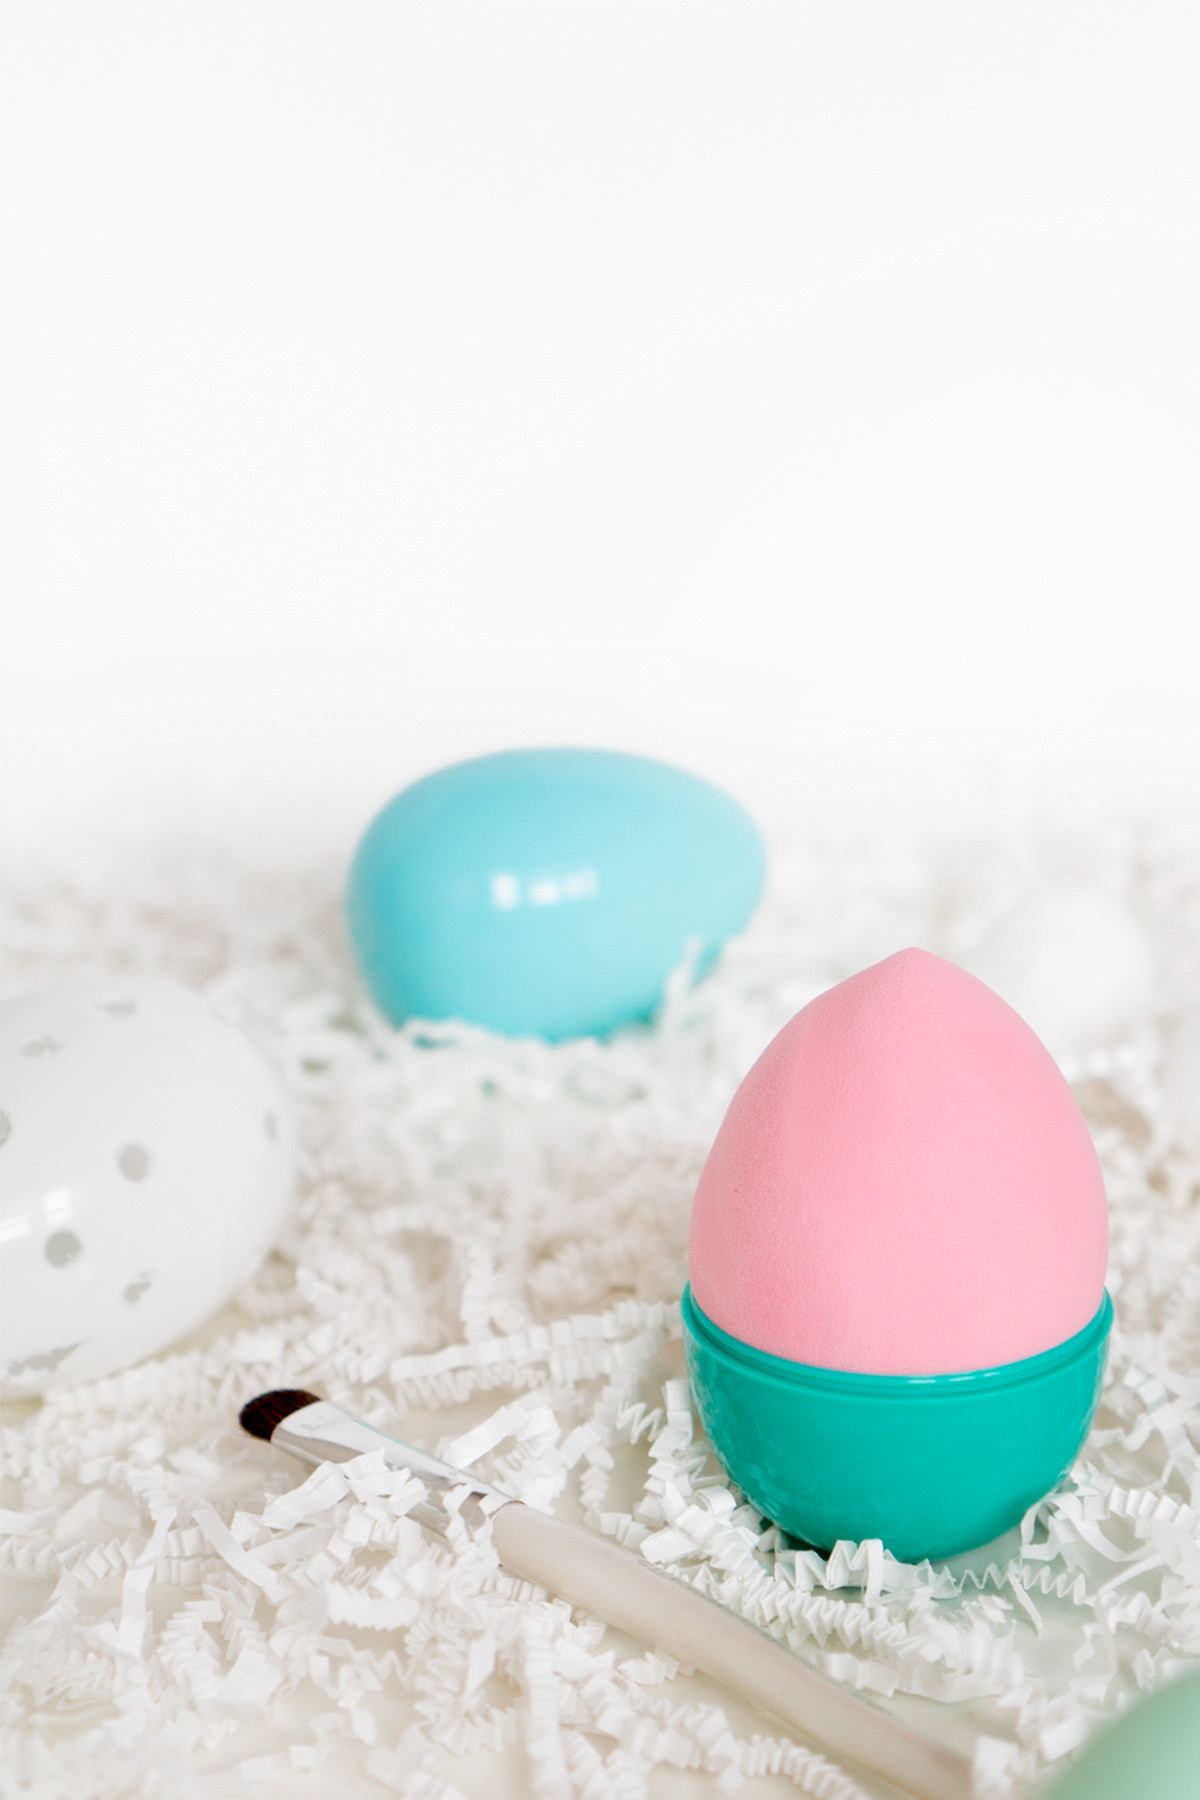 Best ideas about DIY Beauty Blender
. Save or Pin Eggcellent DIY Beauty Blender Case Now.